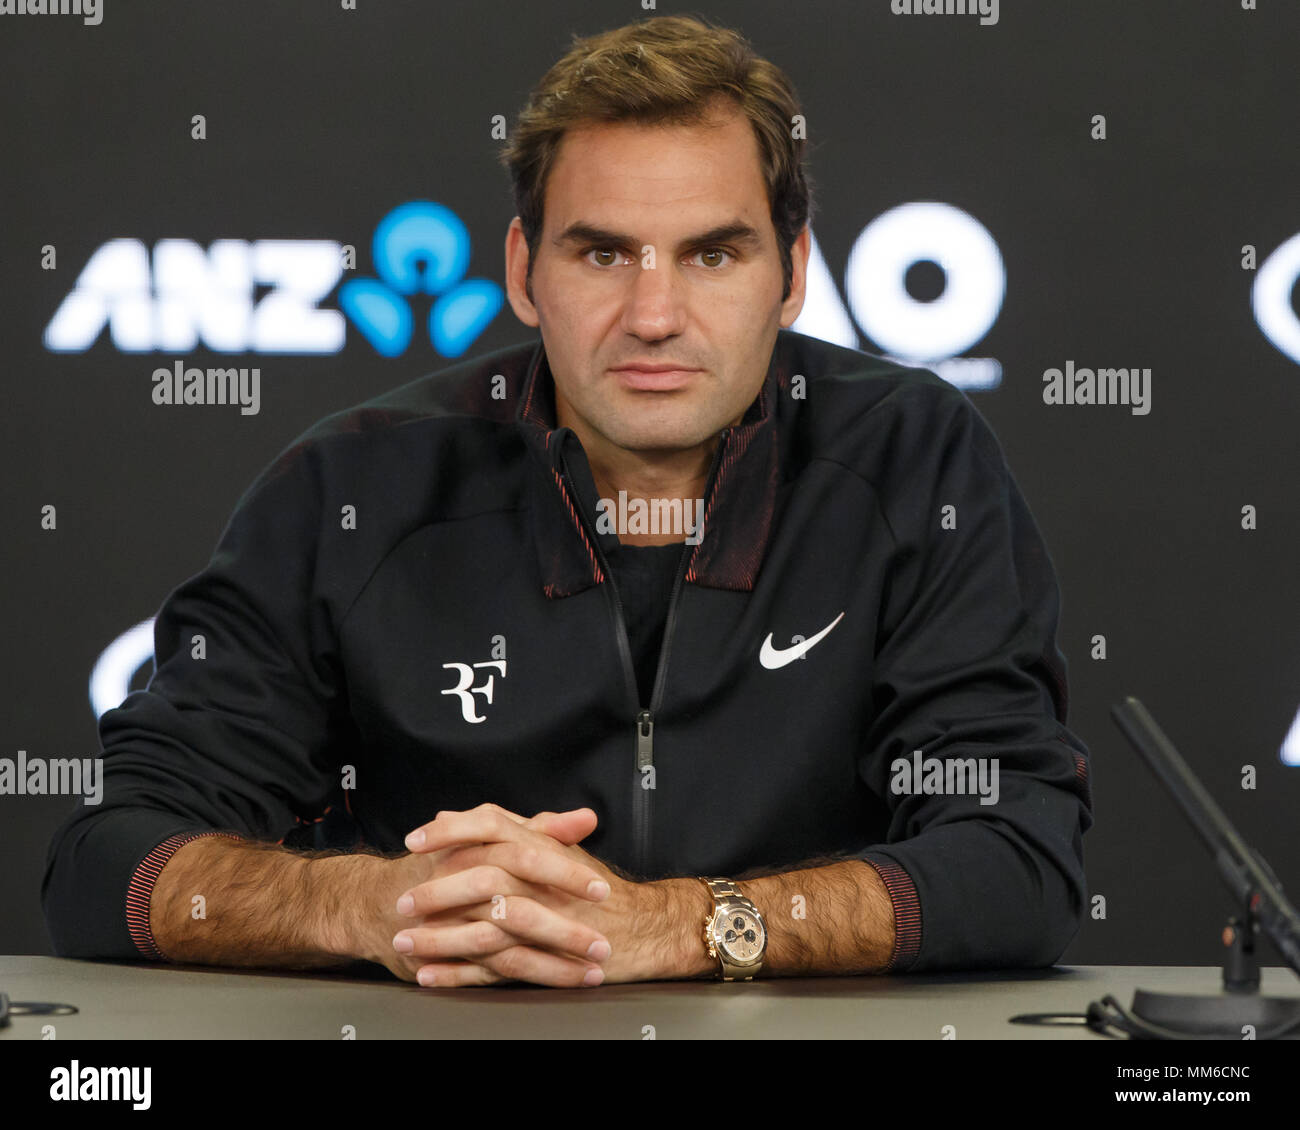 Federer Portrait Stock Photos & Federer Portrait Stock Images - Alamy1300 x 1130